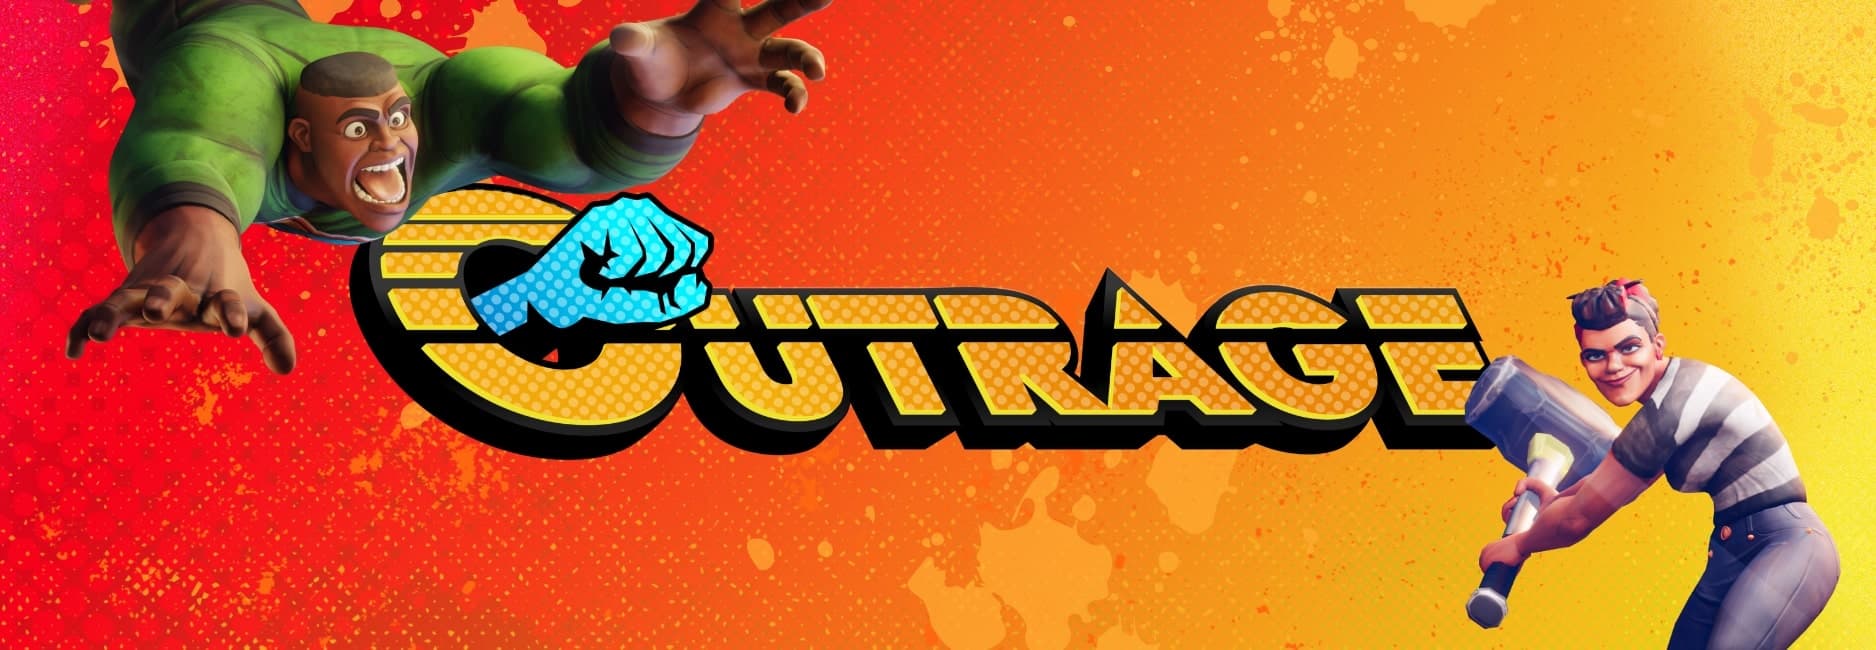 Chukster Studio X Outrage game design